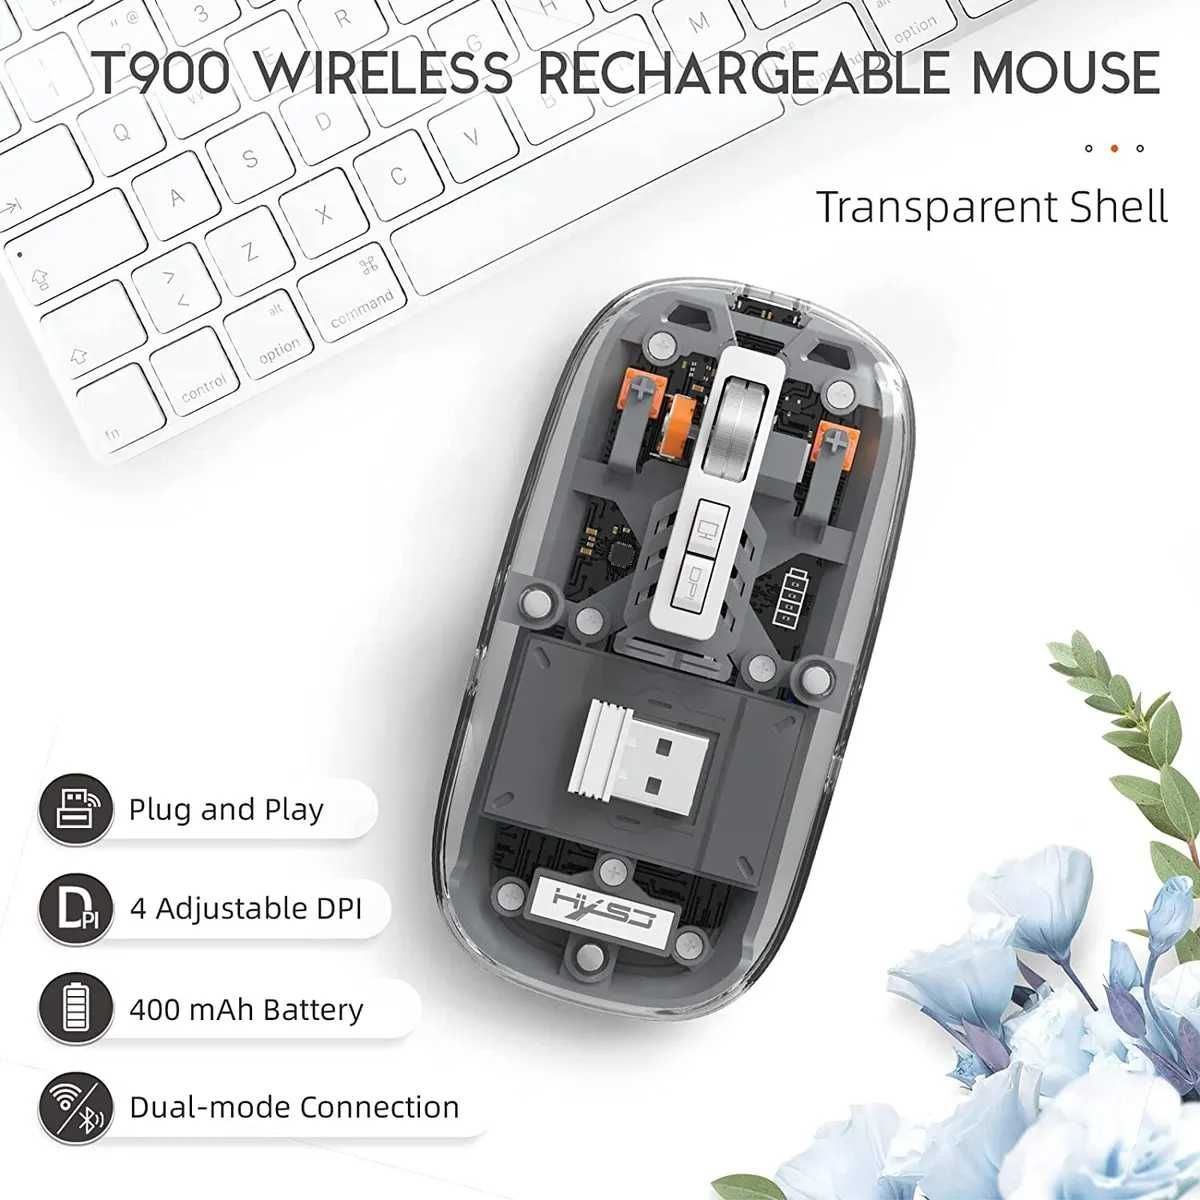 Mouse праздничная мышка бесшумный Bluetooth